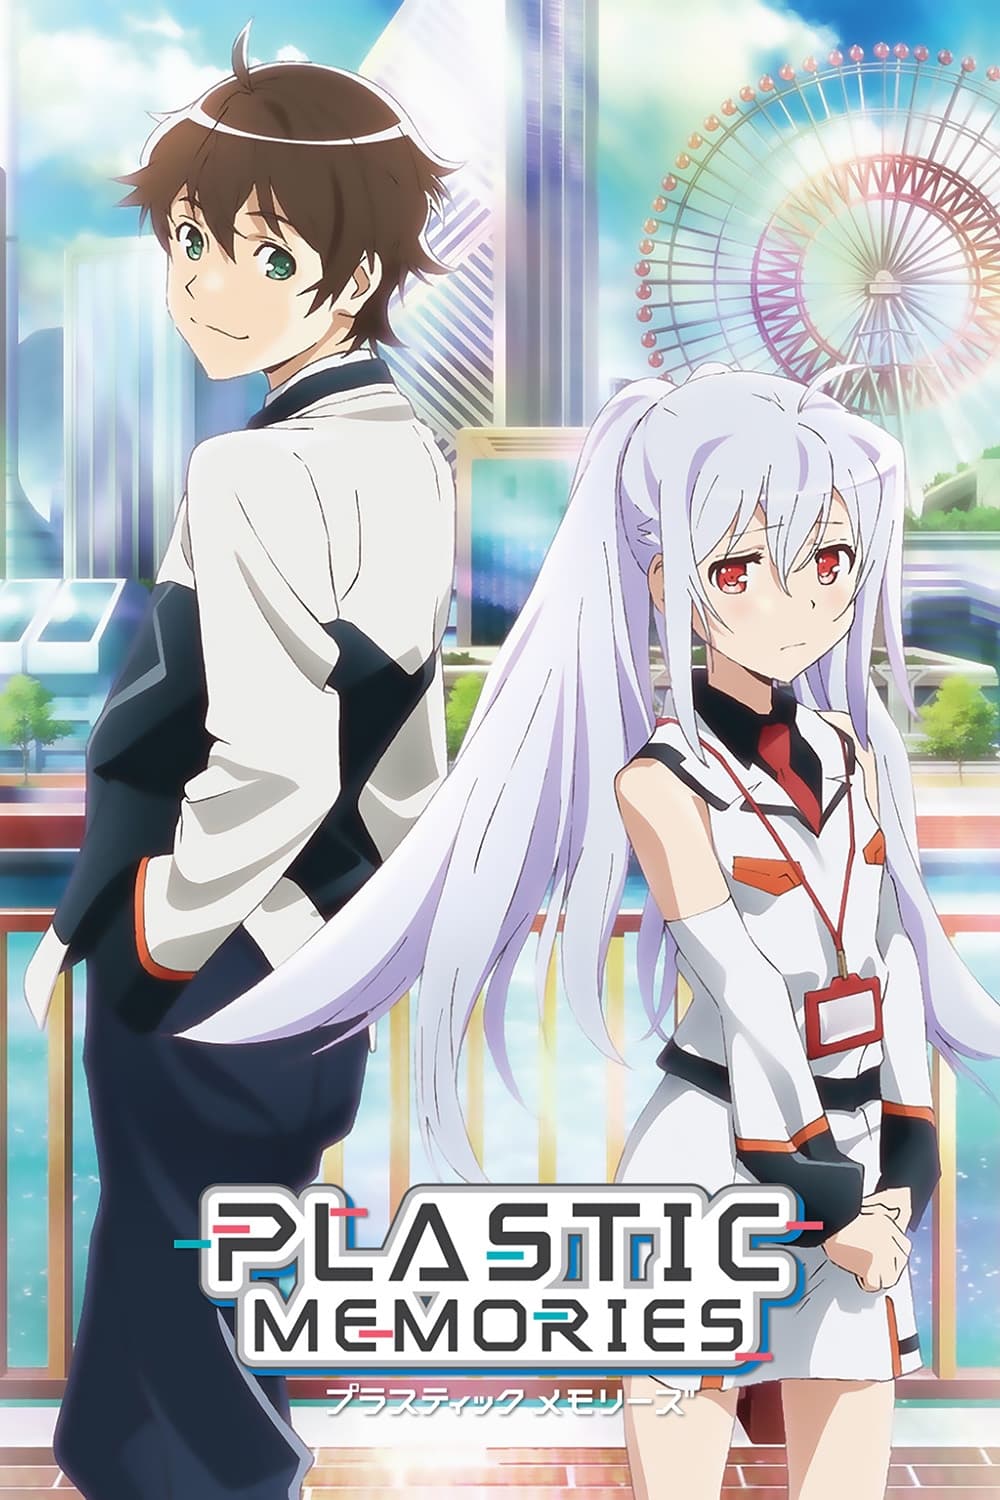 Plastic Memories Complete Anime Series Episodes 1-13